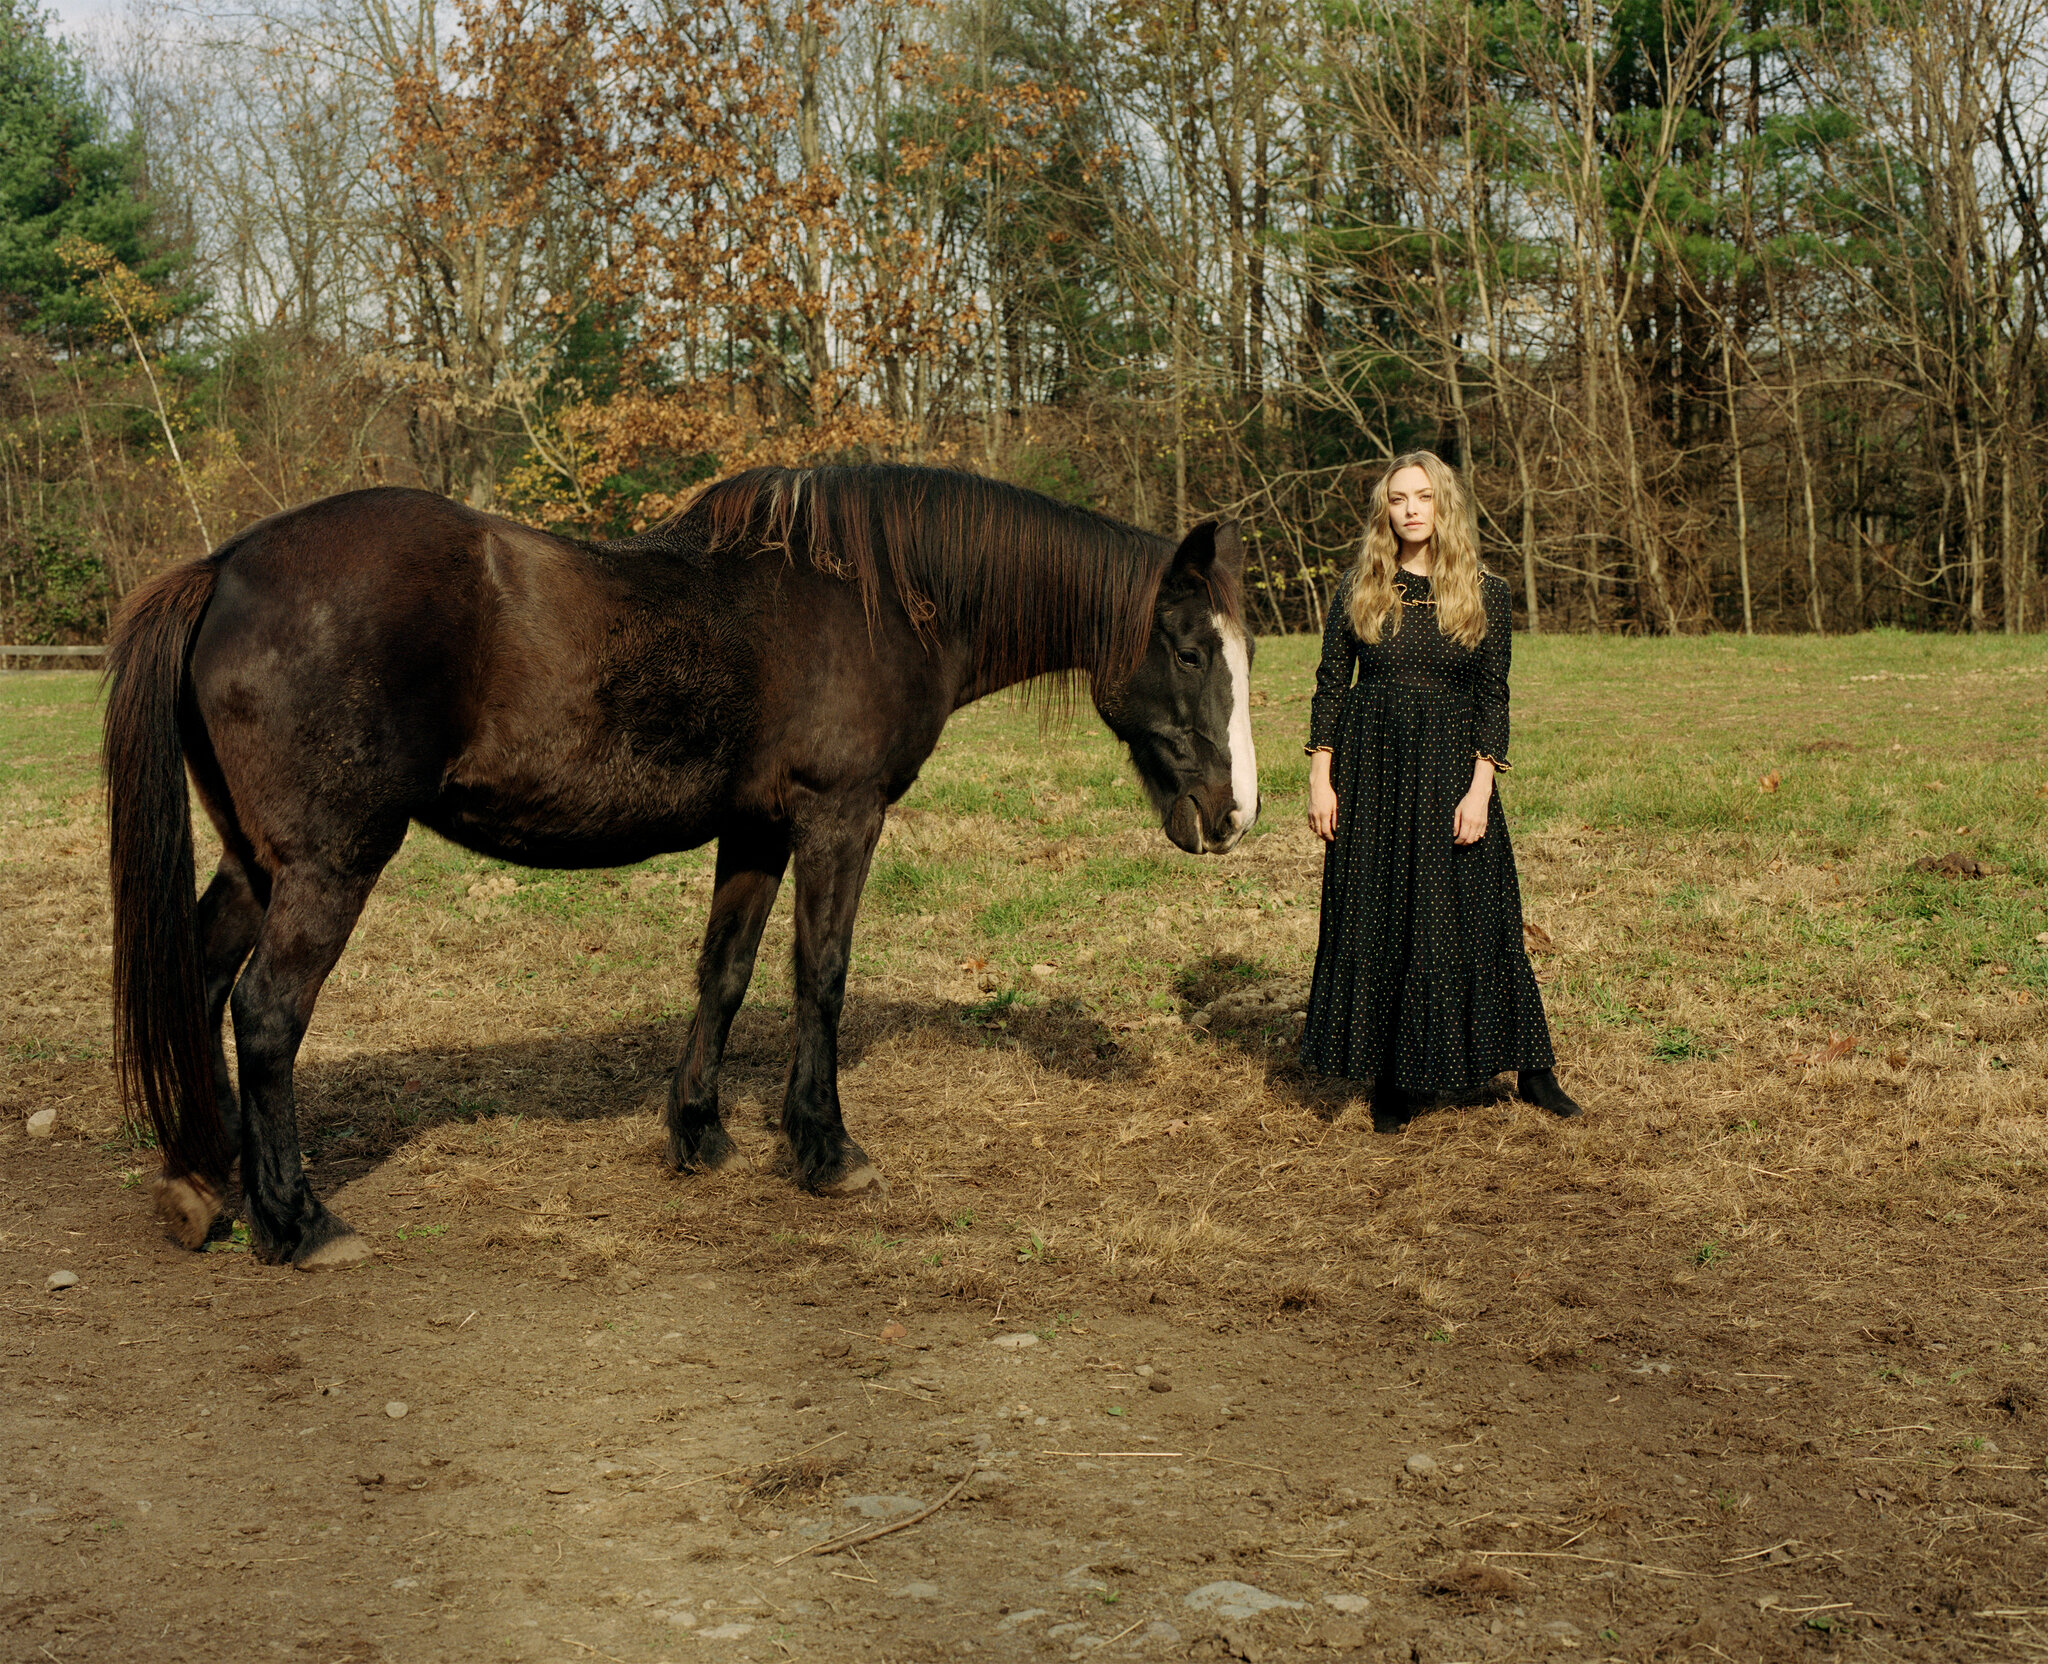 Photos n°4 : Amanda Seyfried on The Farm!